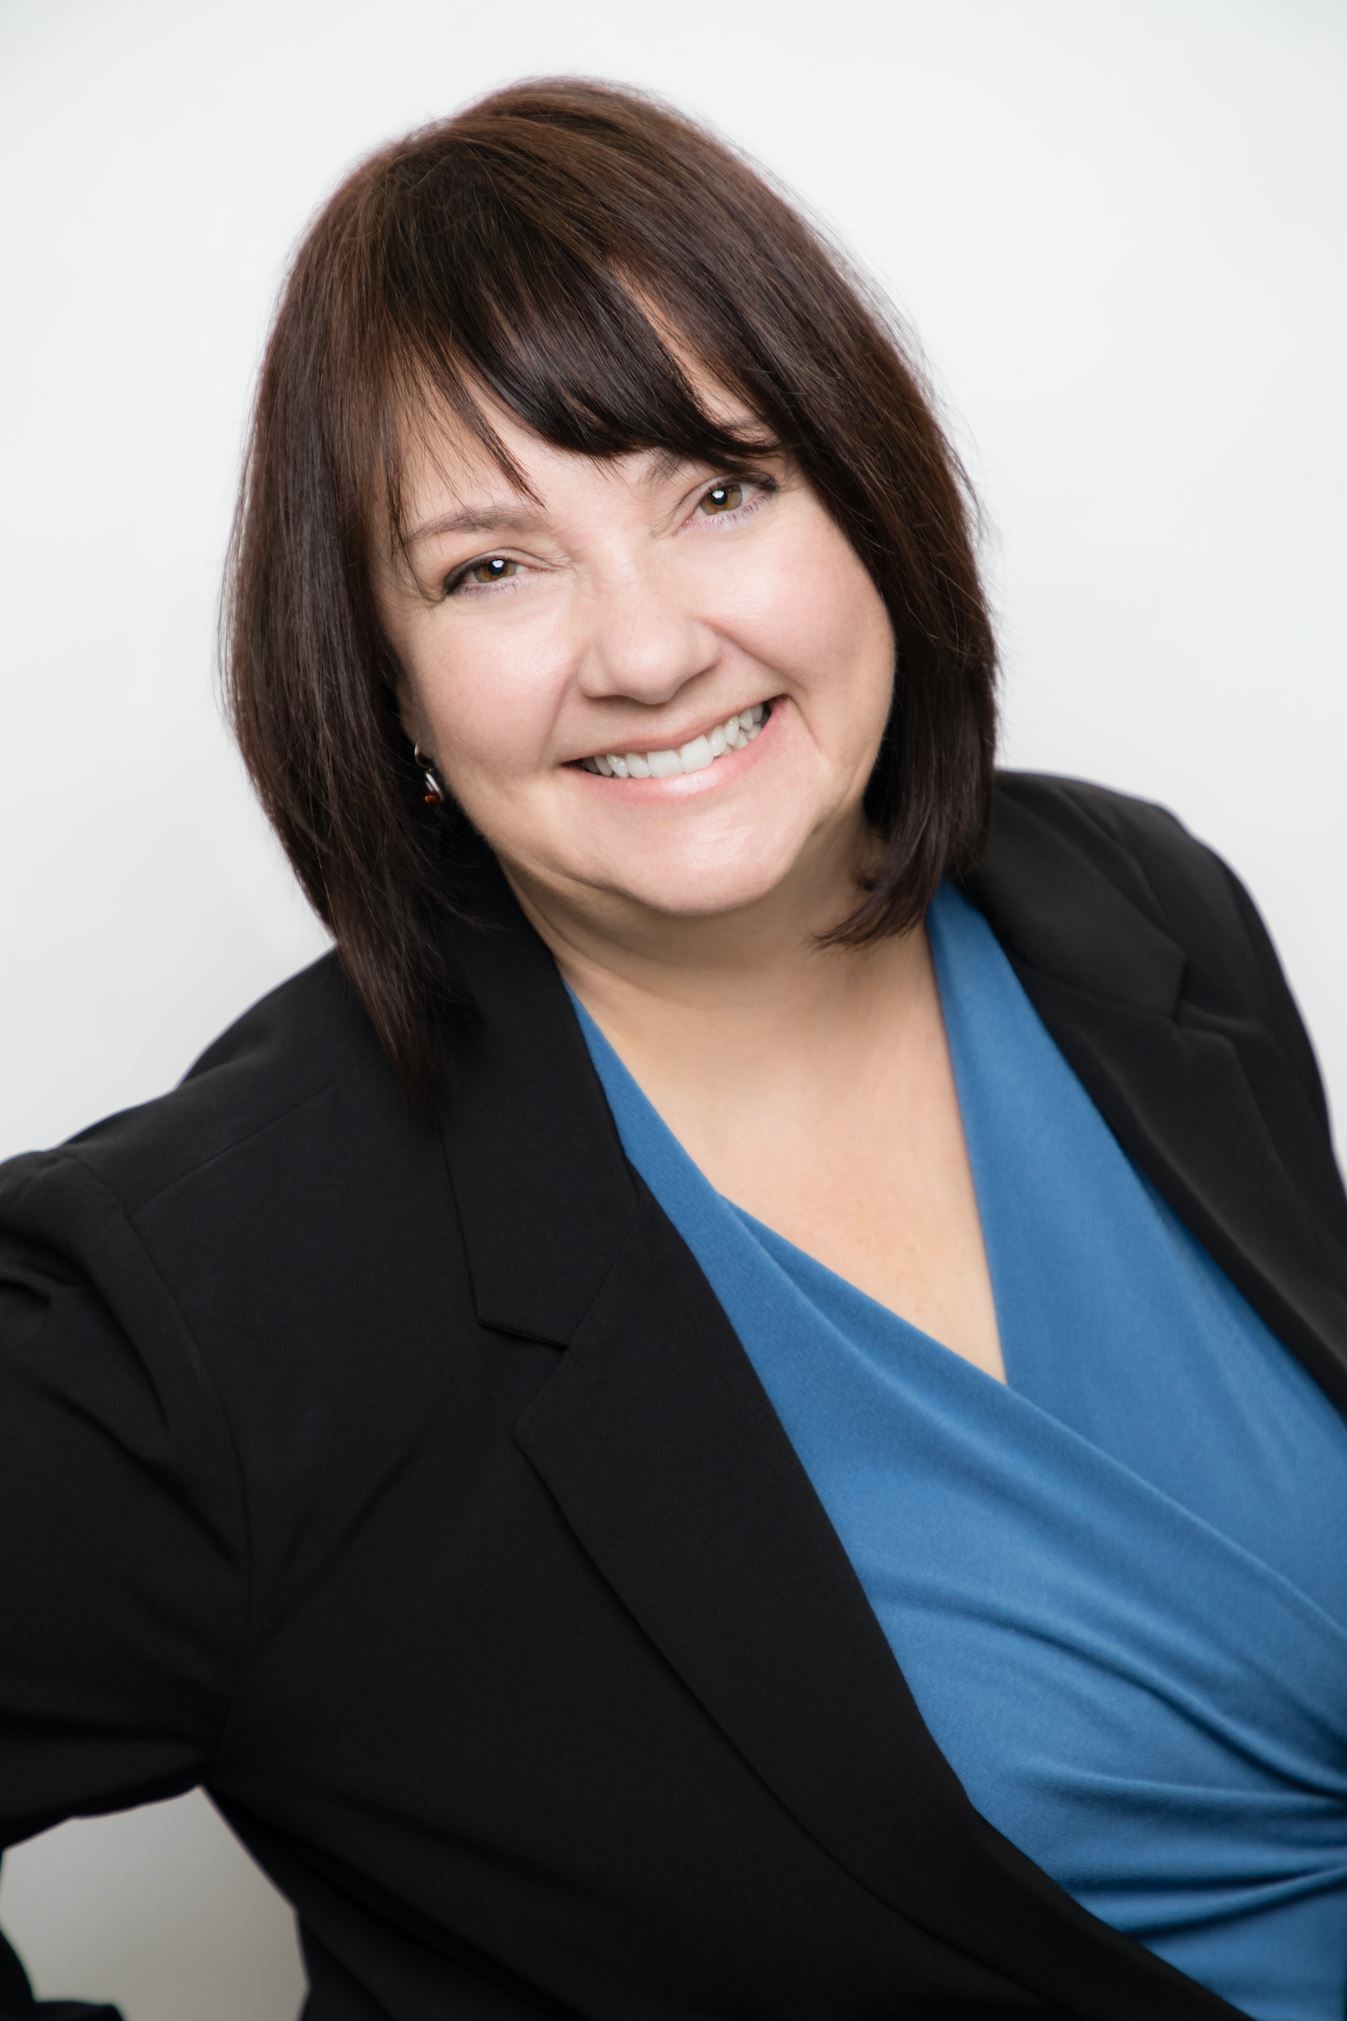 Becky Daggett Mayor of Flagstaff